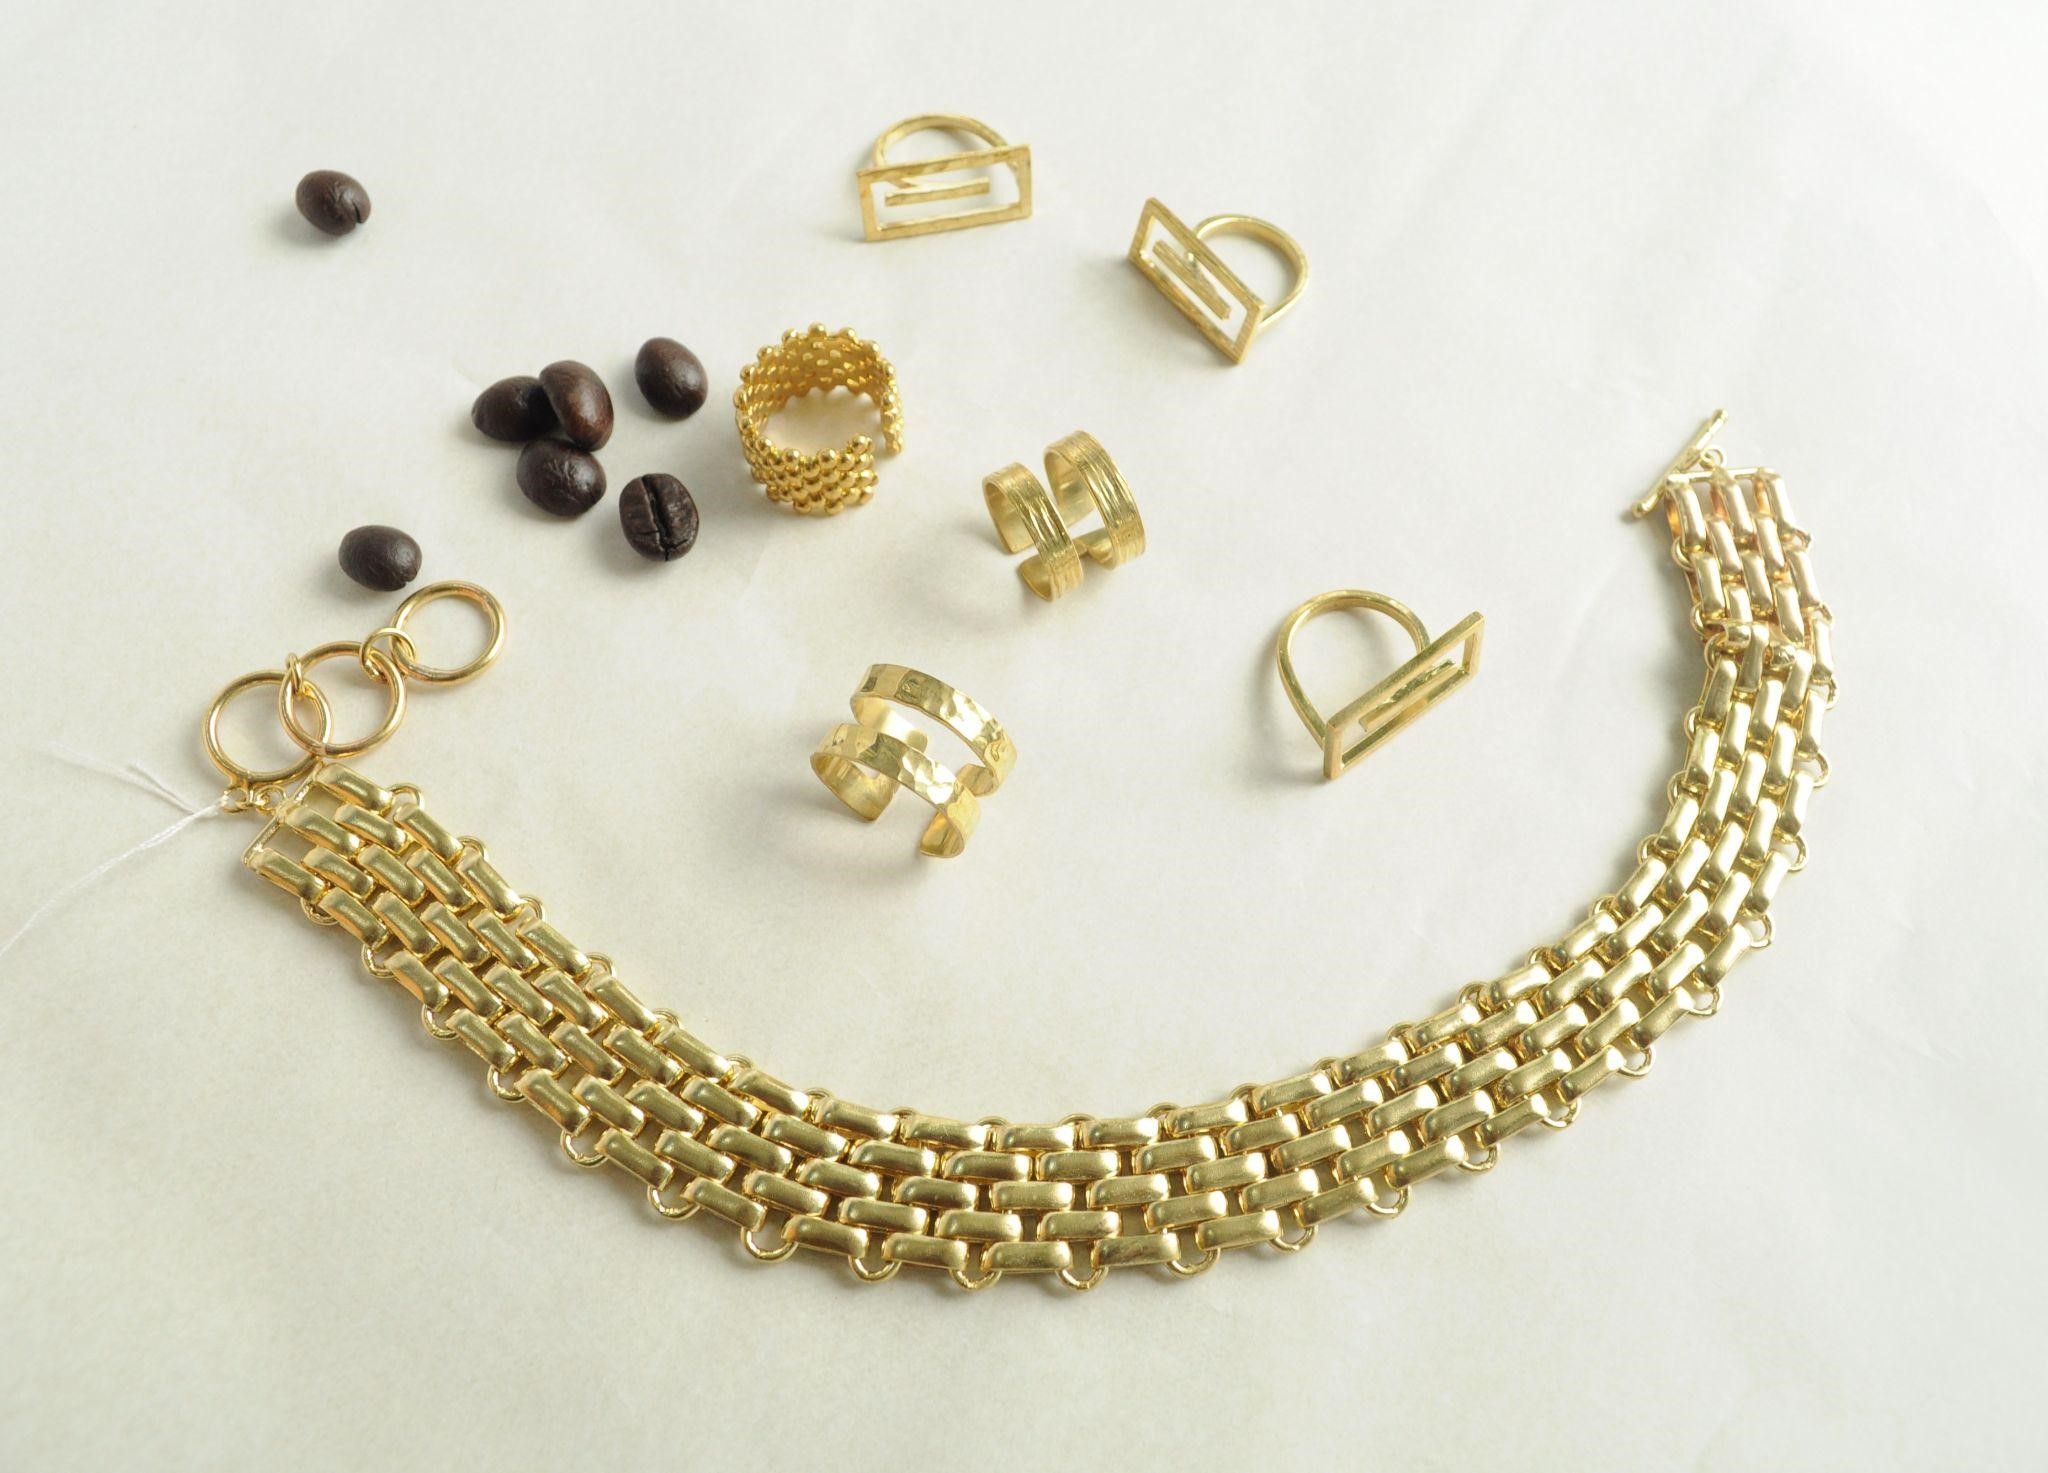 The Art of Wholesale Brass Jewelry: Professional Wholesale Brass Jewelry Designers